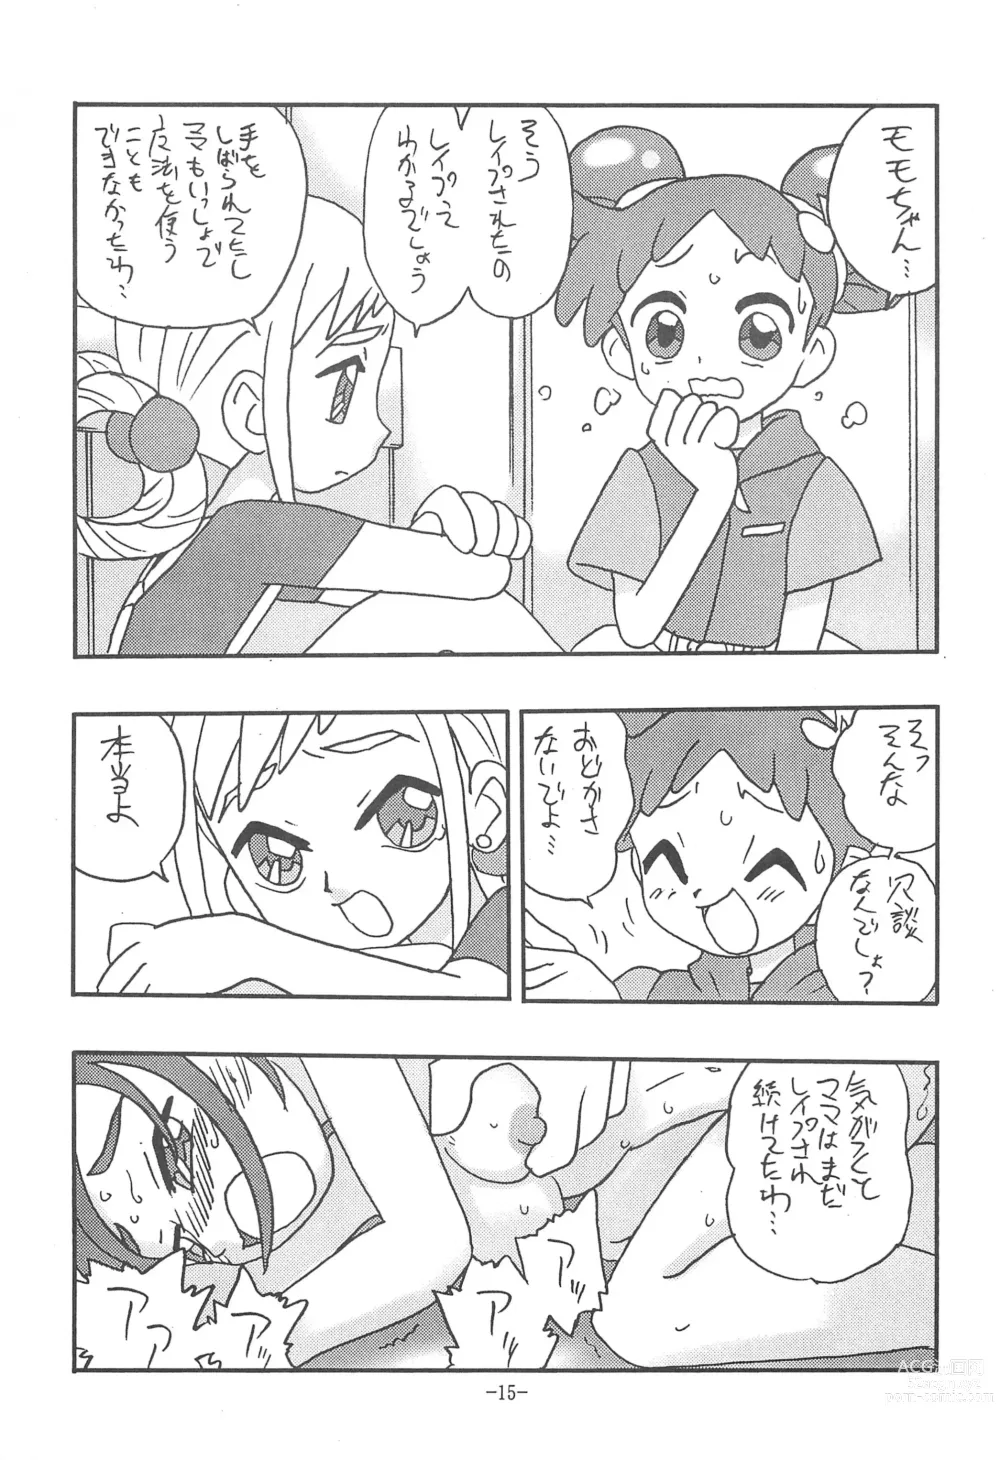 Page 15 of doujinshi CAN YOU KEEP A SECRET?